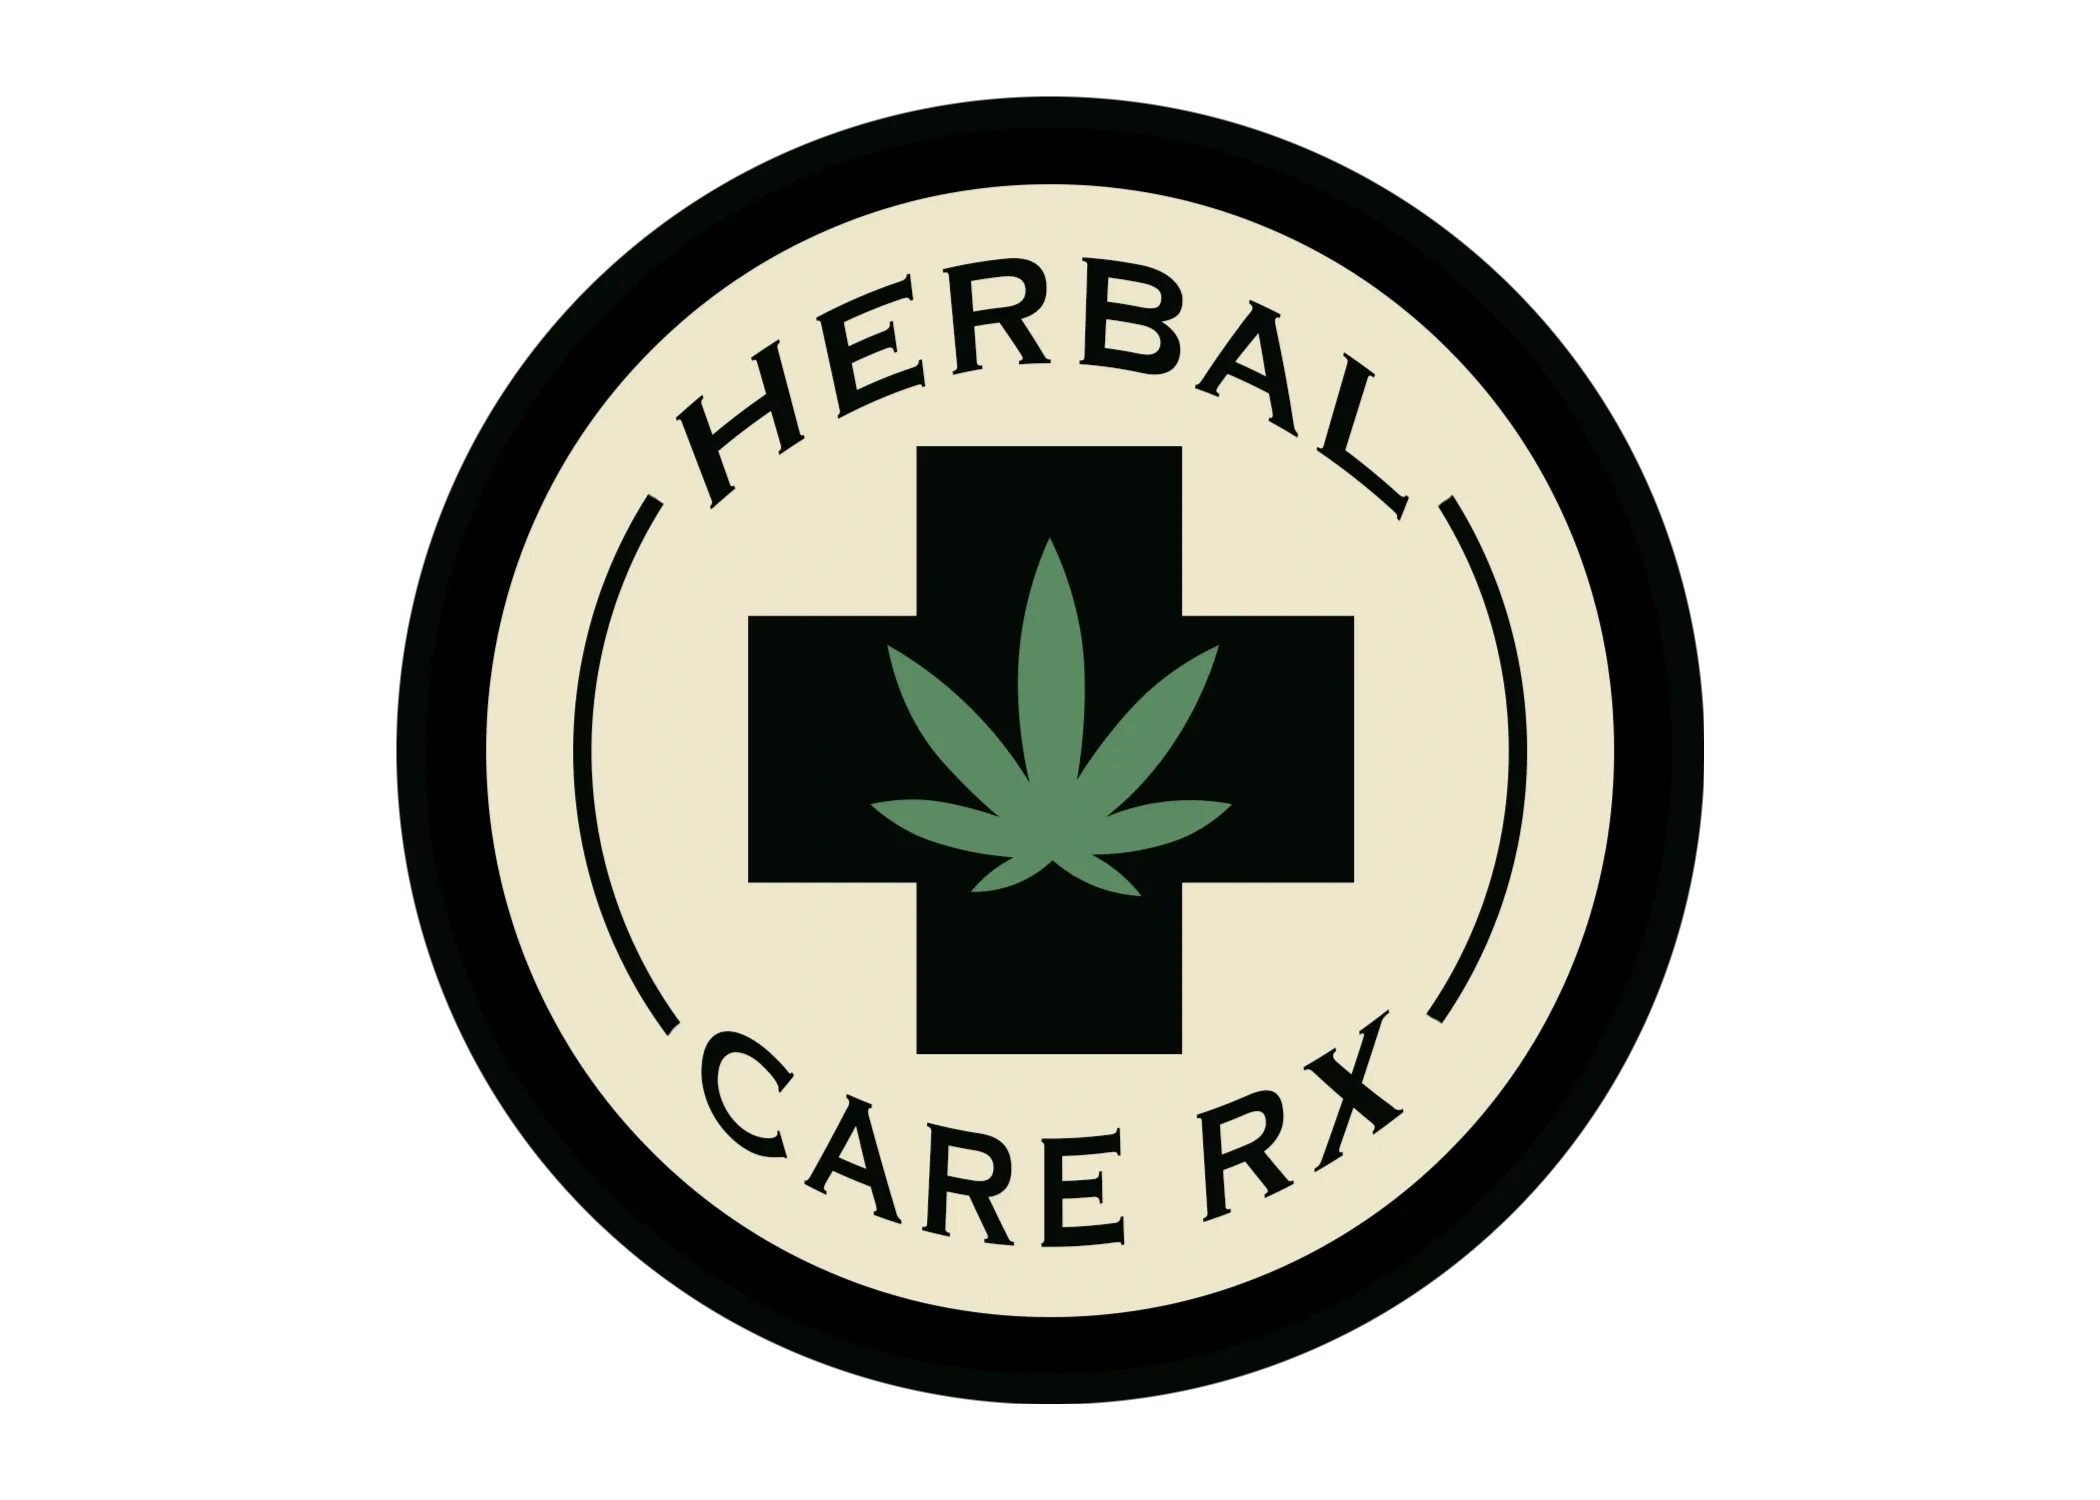 (c) Herbalcarerx.com